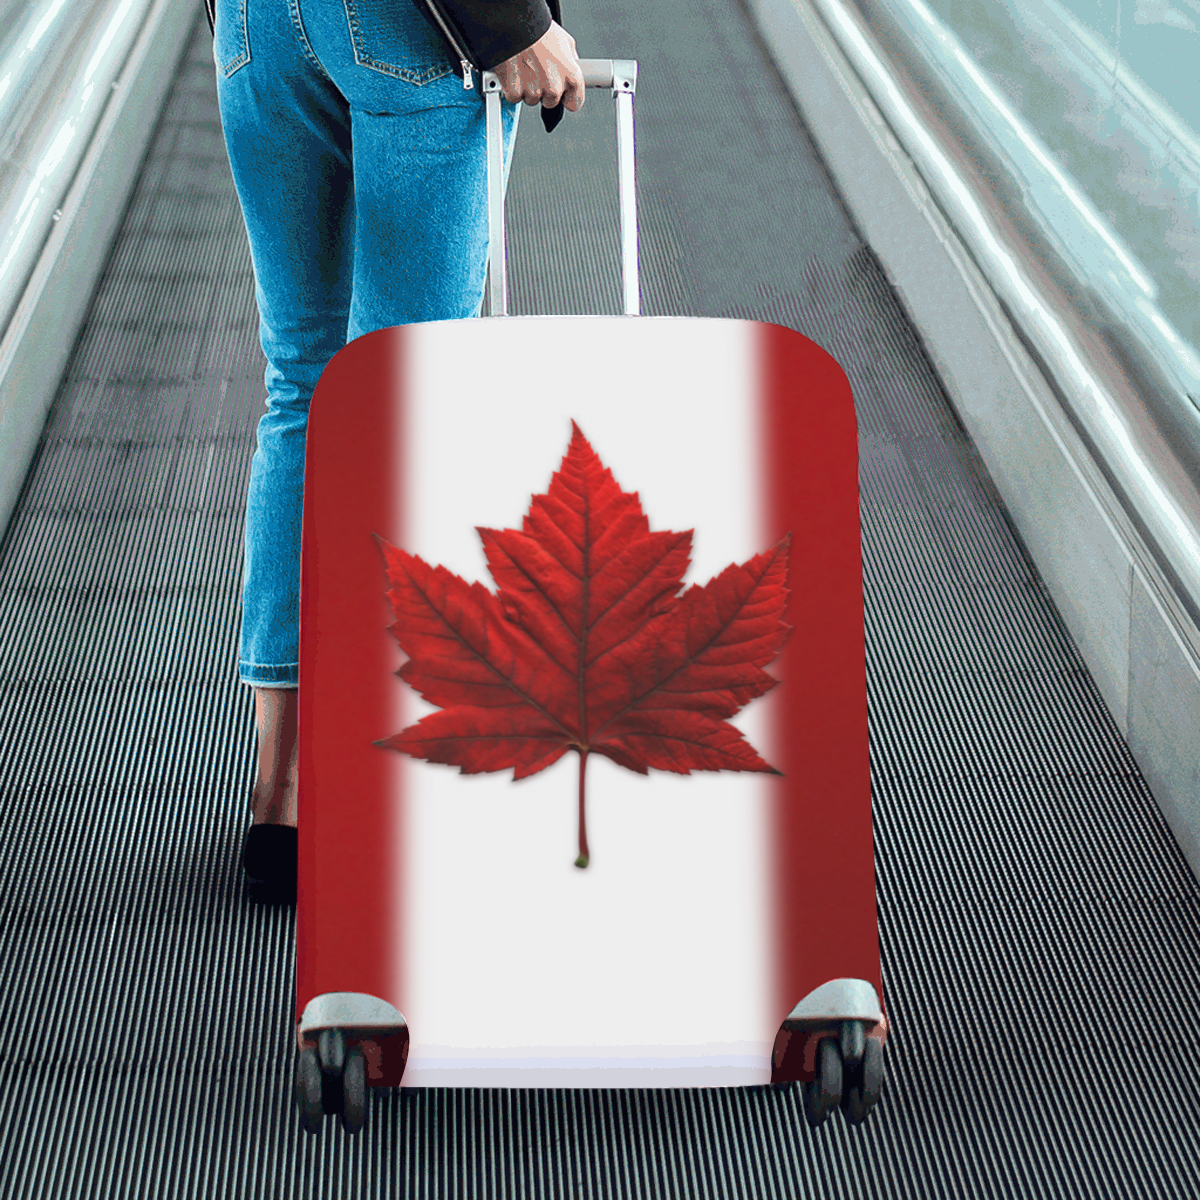 Canada Flag Luggage Luggage Cover/Large 26"-28"